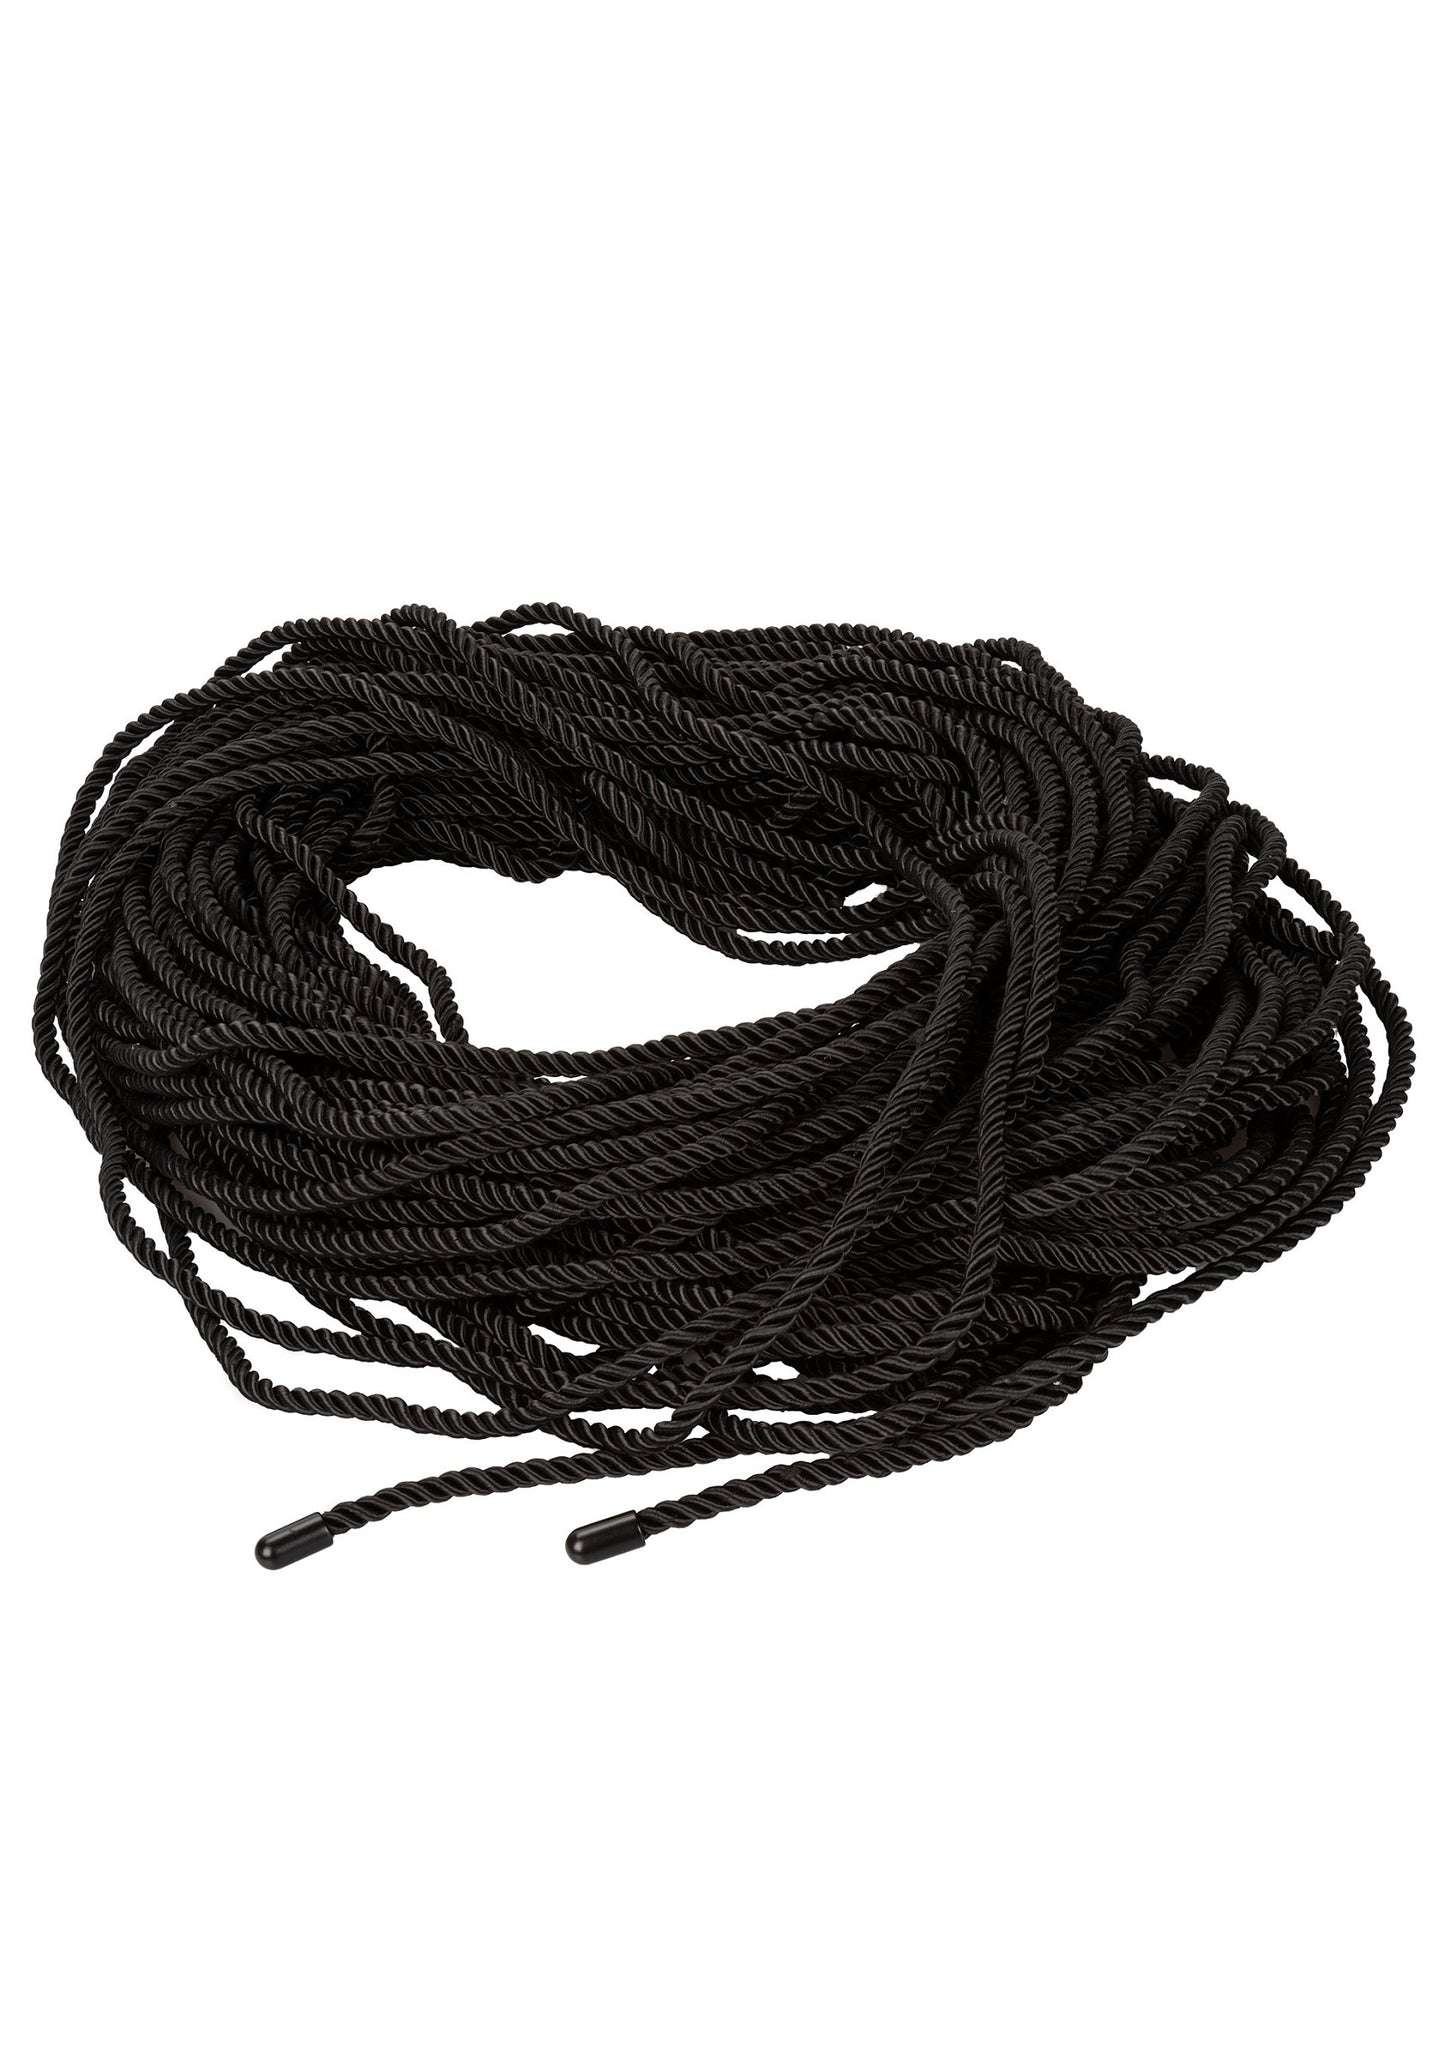 CalExotics Scandal BDSM Rope 164'/50 m BLACK - 3